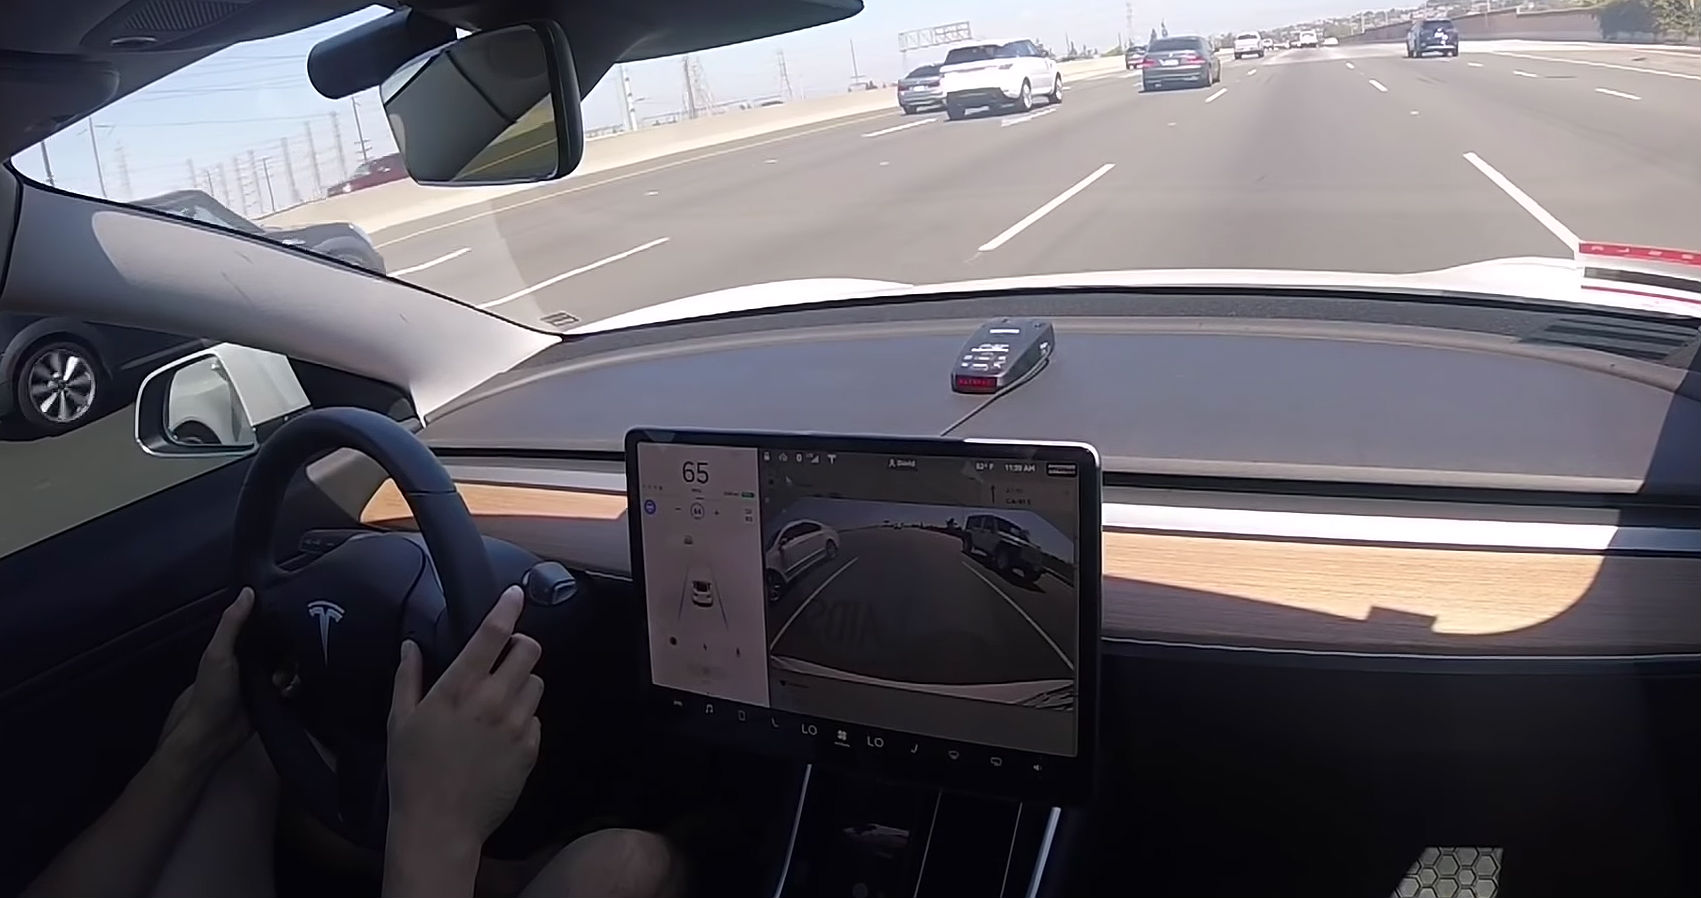 Tesla Autopilot shows off blind spot detection prowess ahead of Software V9 release